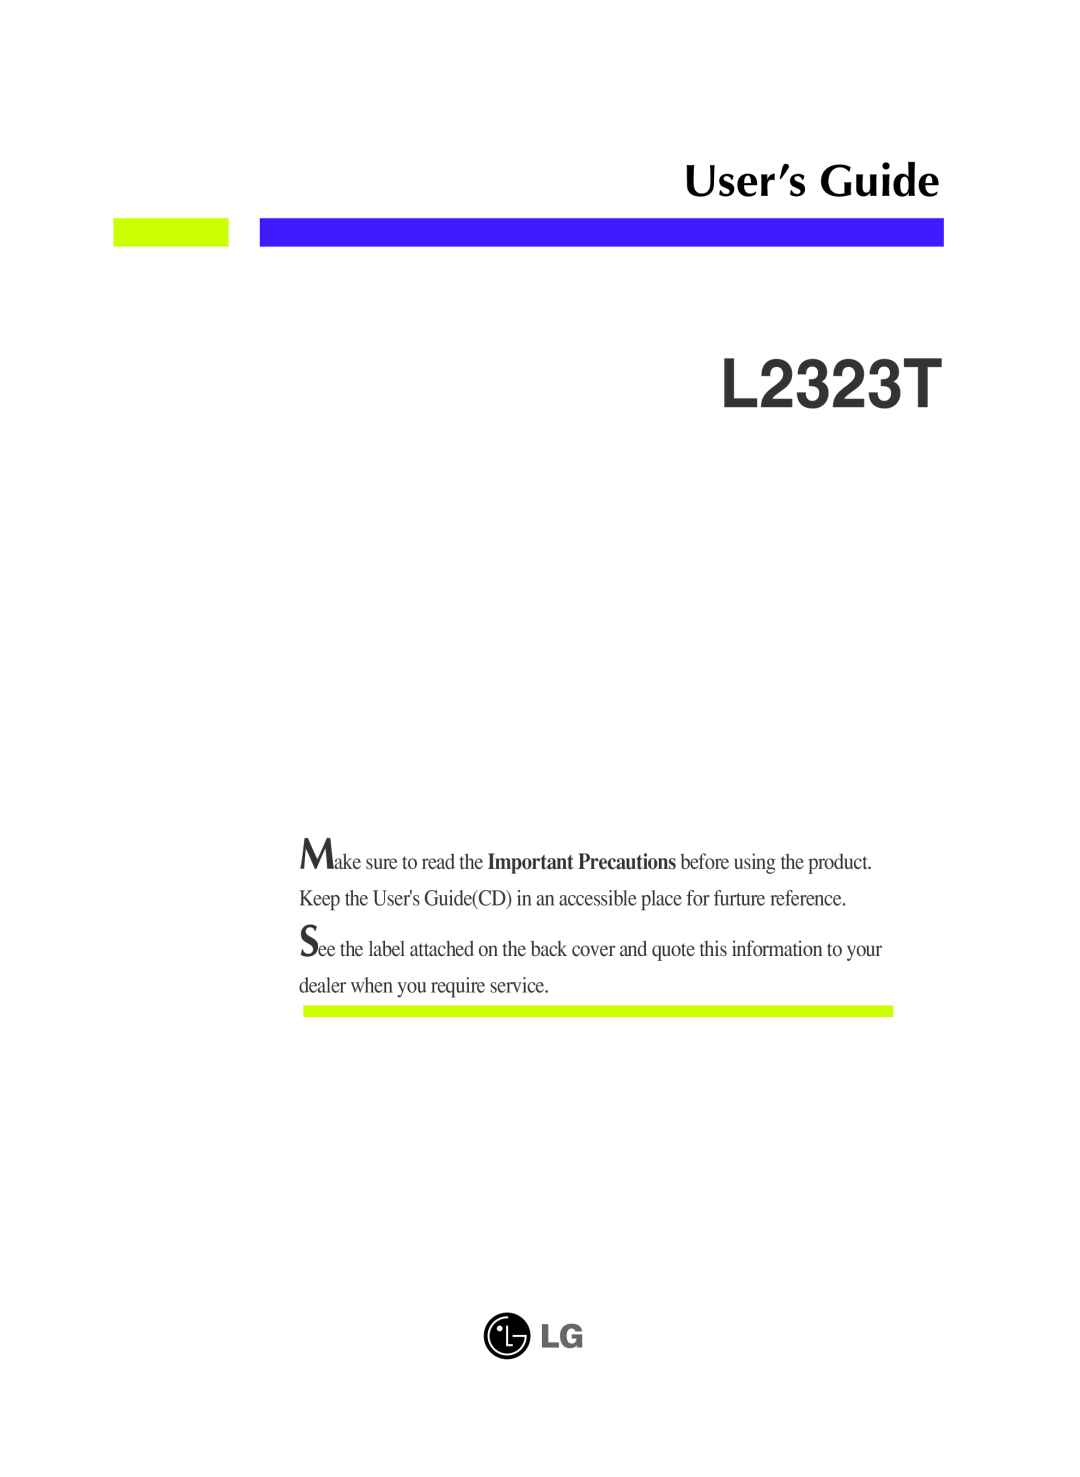 LG Electronics L2323T manual User’s Guide 